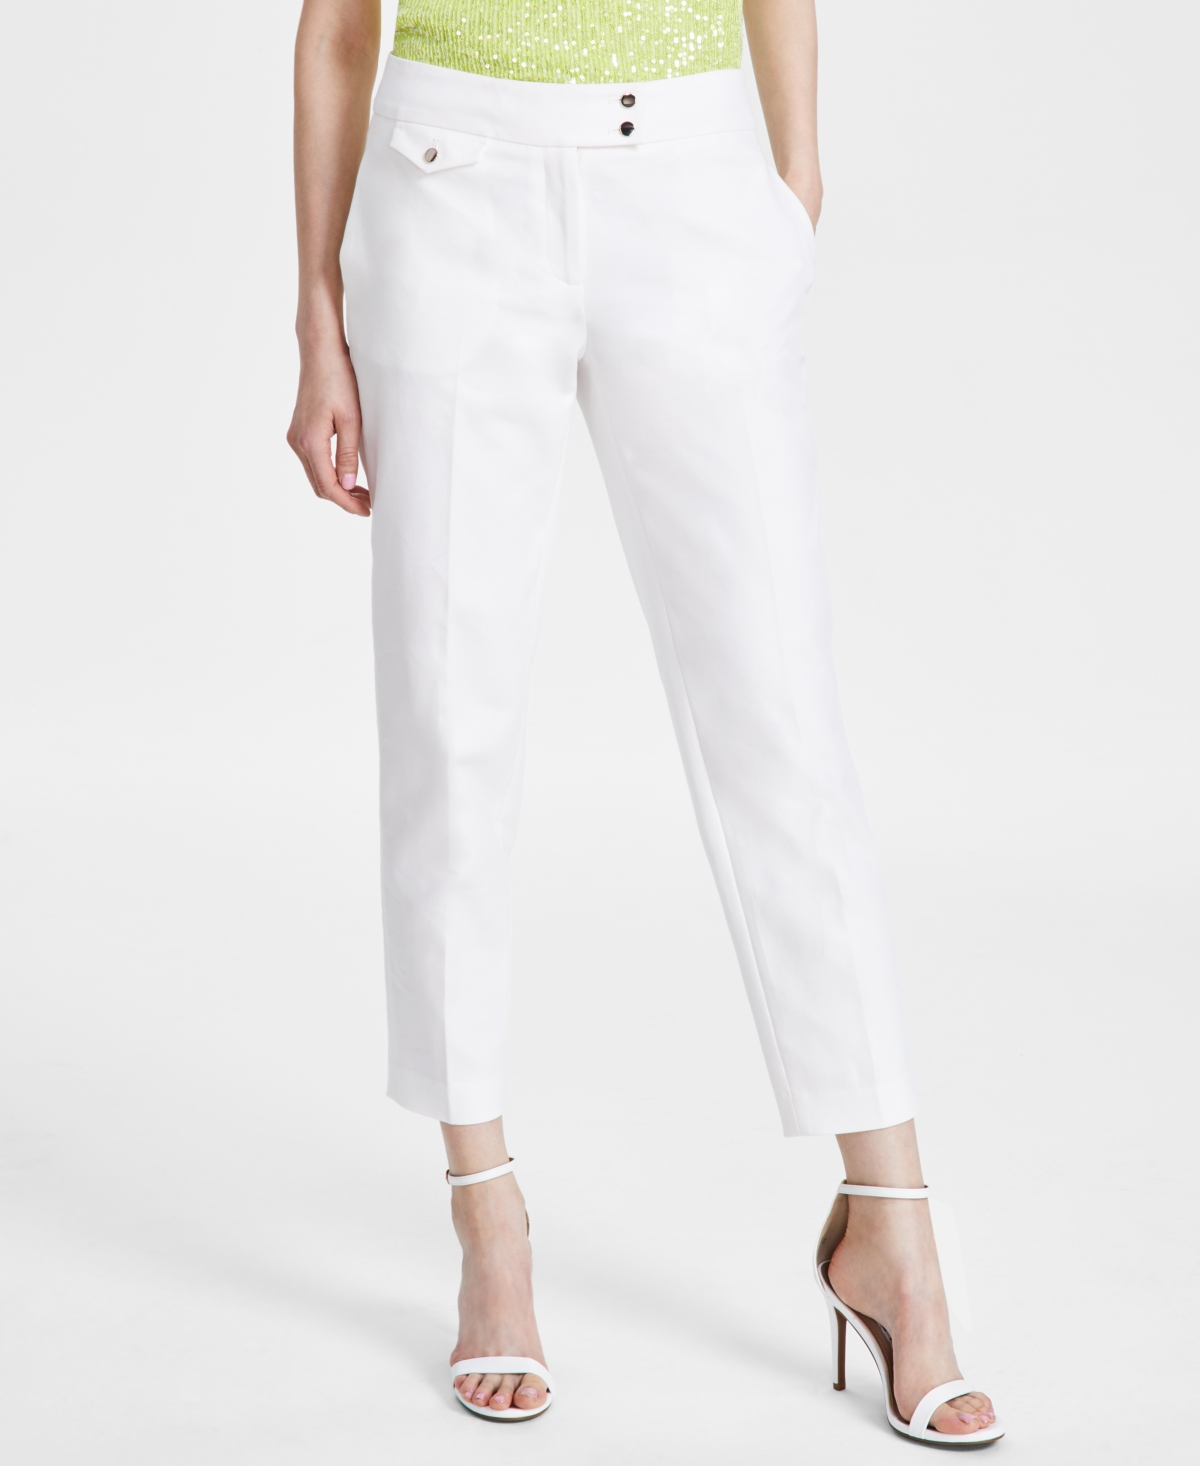 Women's Slim-Fit Double-Button Ankle Pants - BRIGHT WHITE